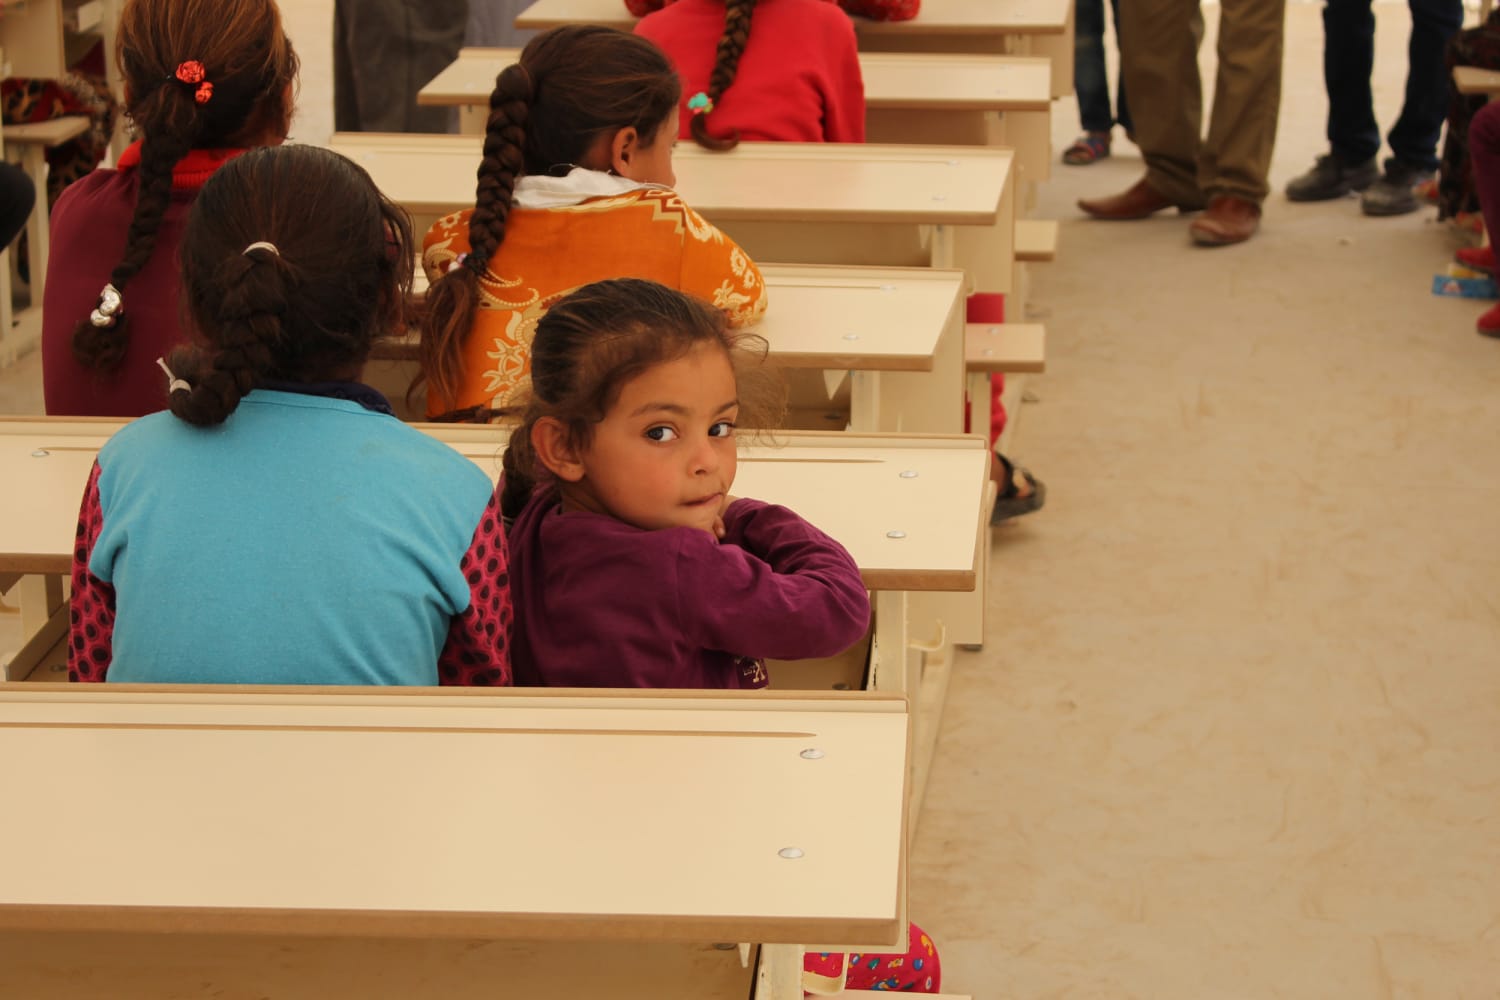 iraqi children in school